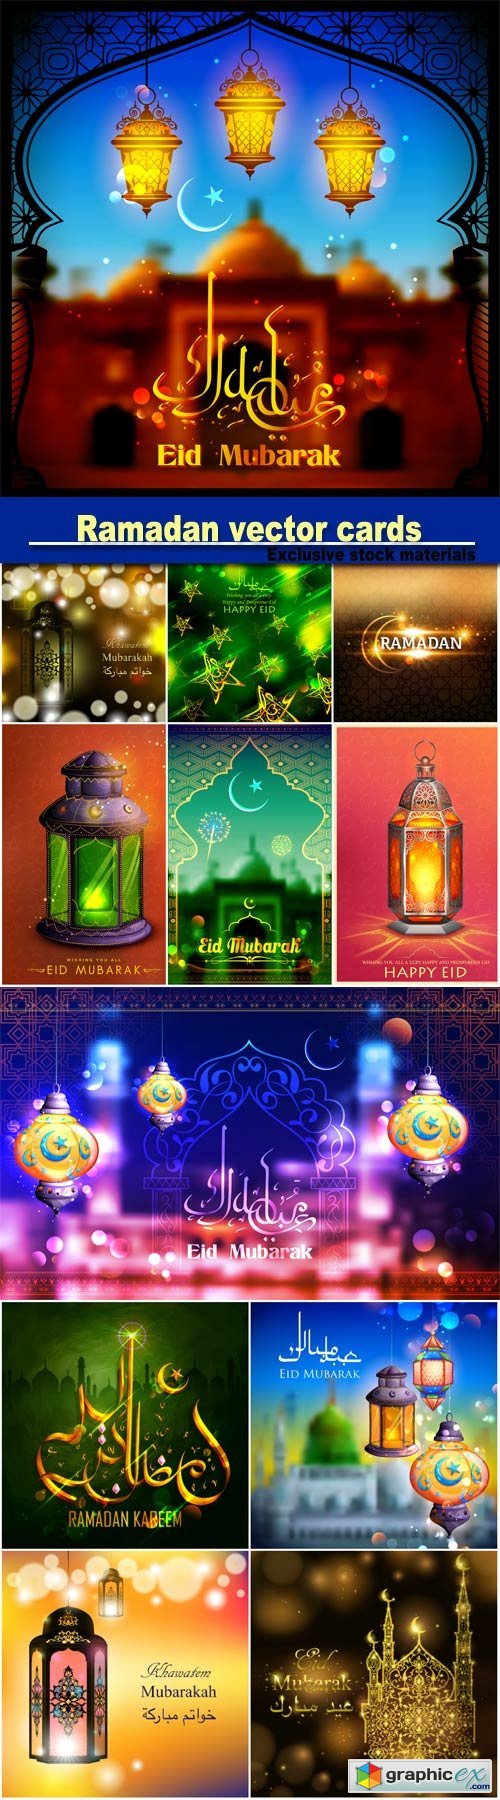 Ramadan vector cards